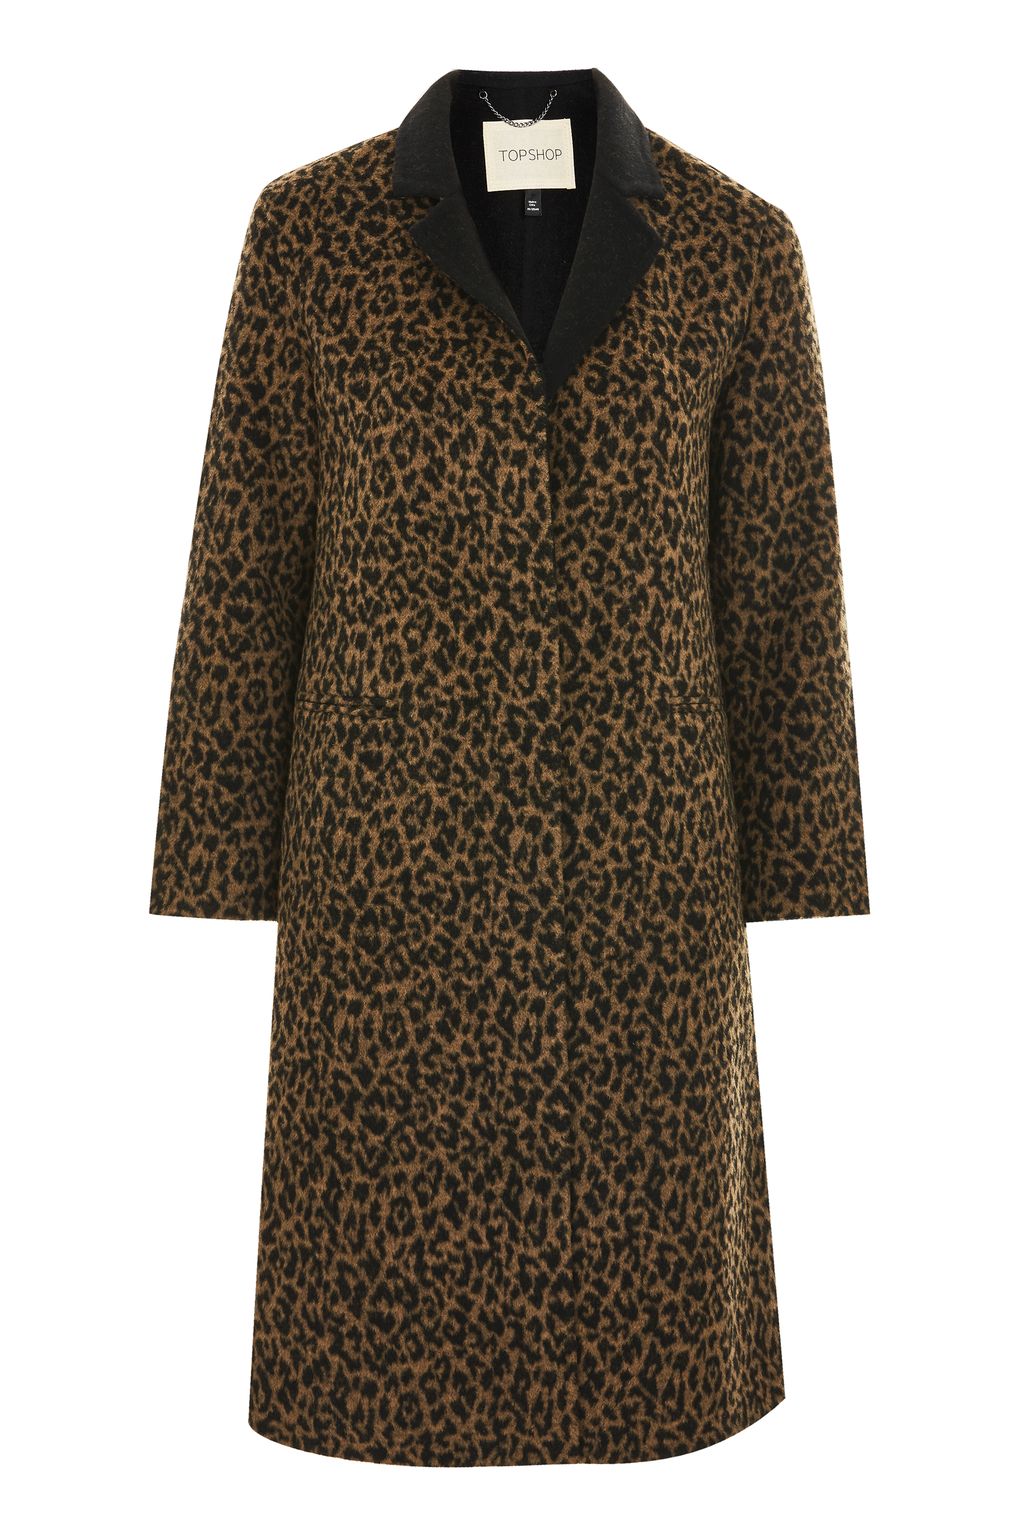 Topshop Button Seamed Leopard Print Coat 